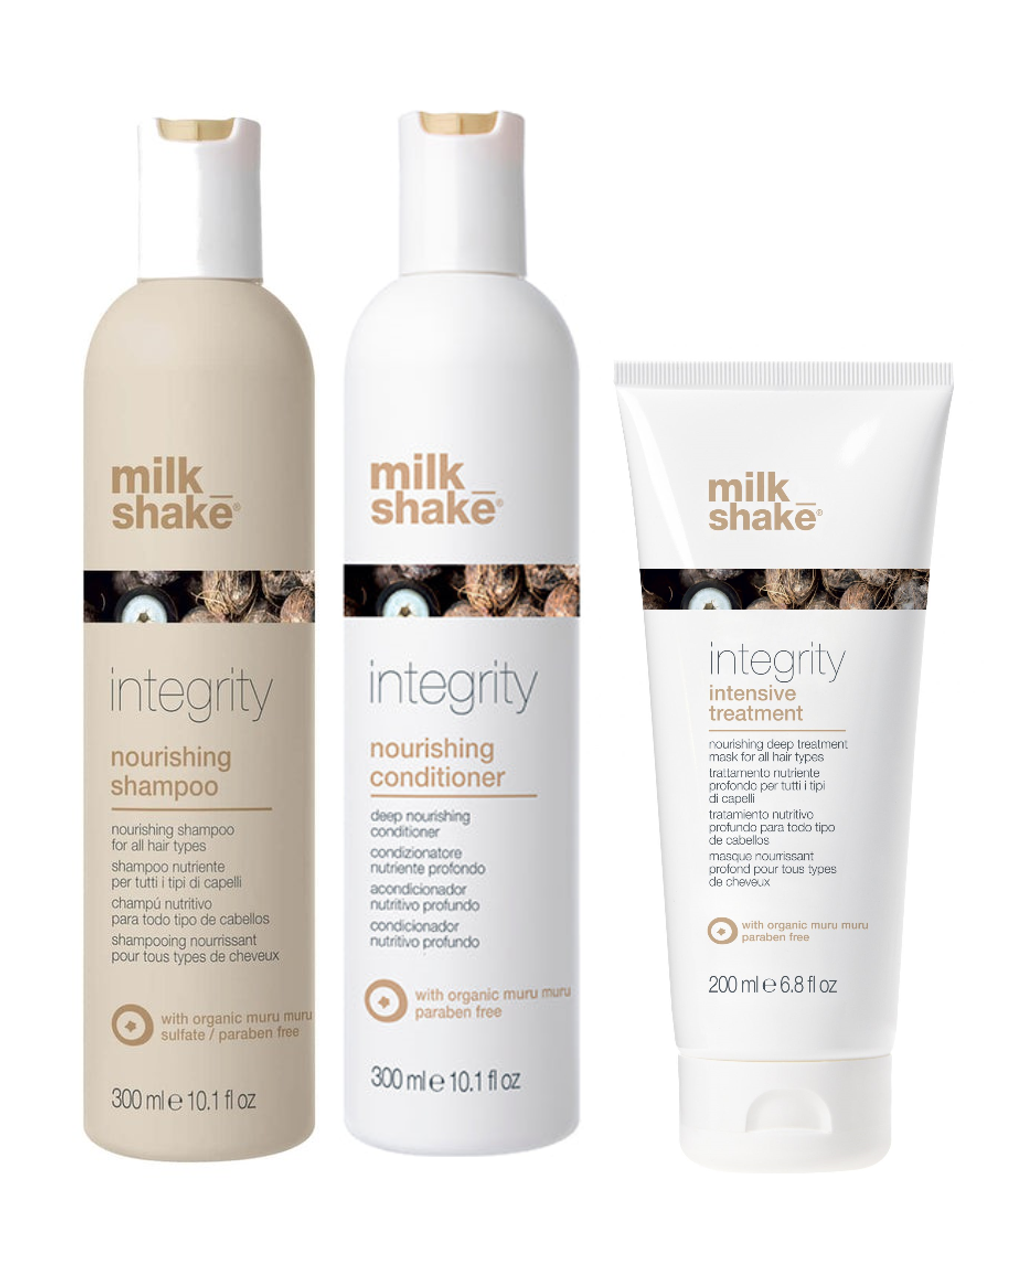 Milkshake Integrity Nourishing Shampoo & Conditioner & Intensive Treatment